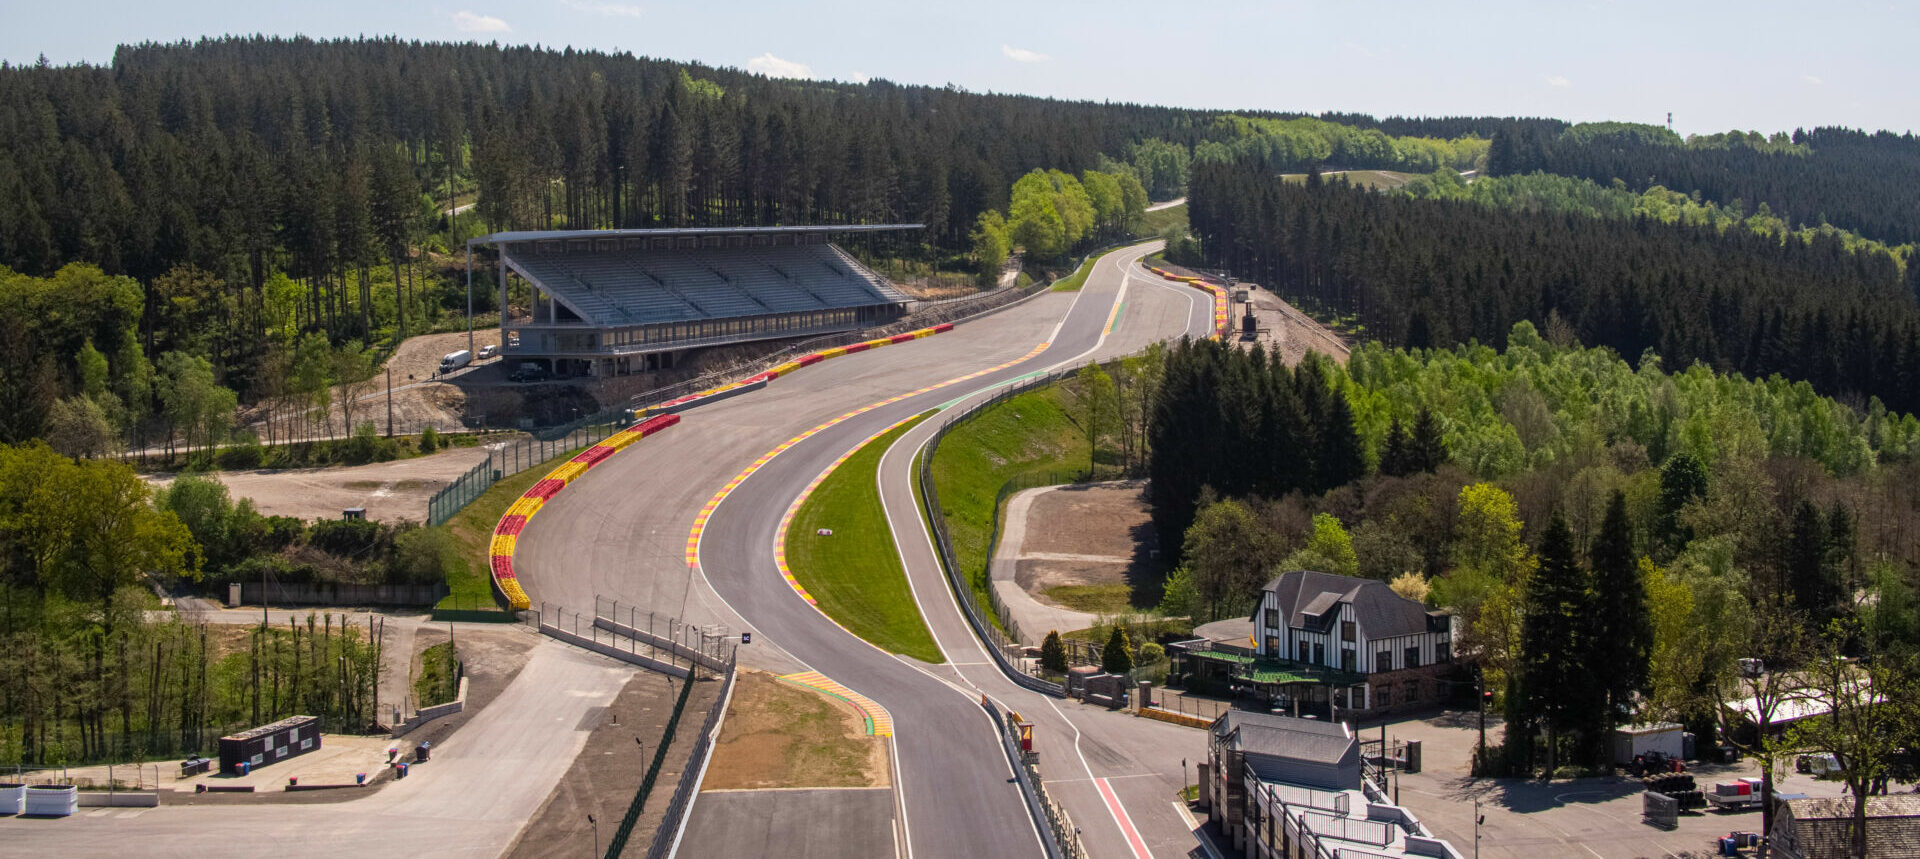 The newly renovated Circuit de Spa-Francorchamps, in Belgium. Photo courtesy FIM EWC.